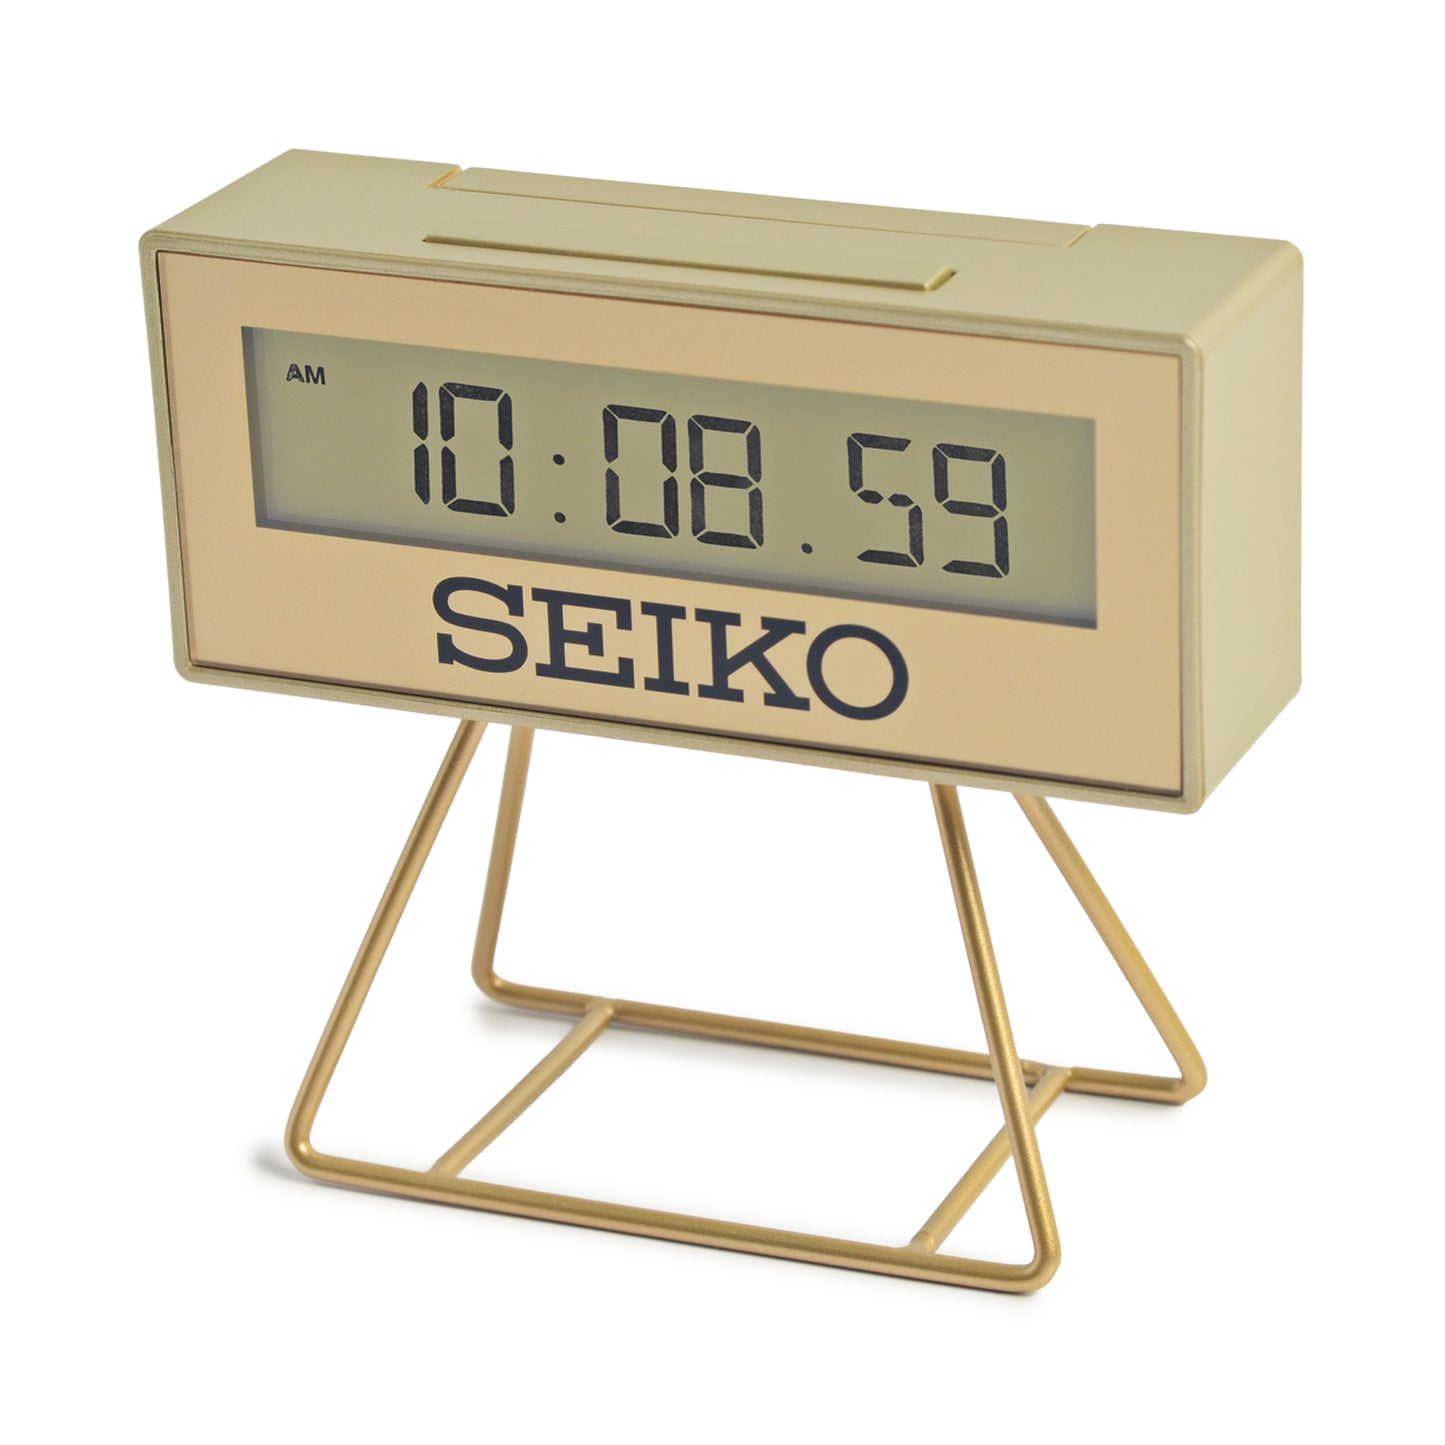 Seiko Victory Limited Edition Alarm Clock